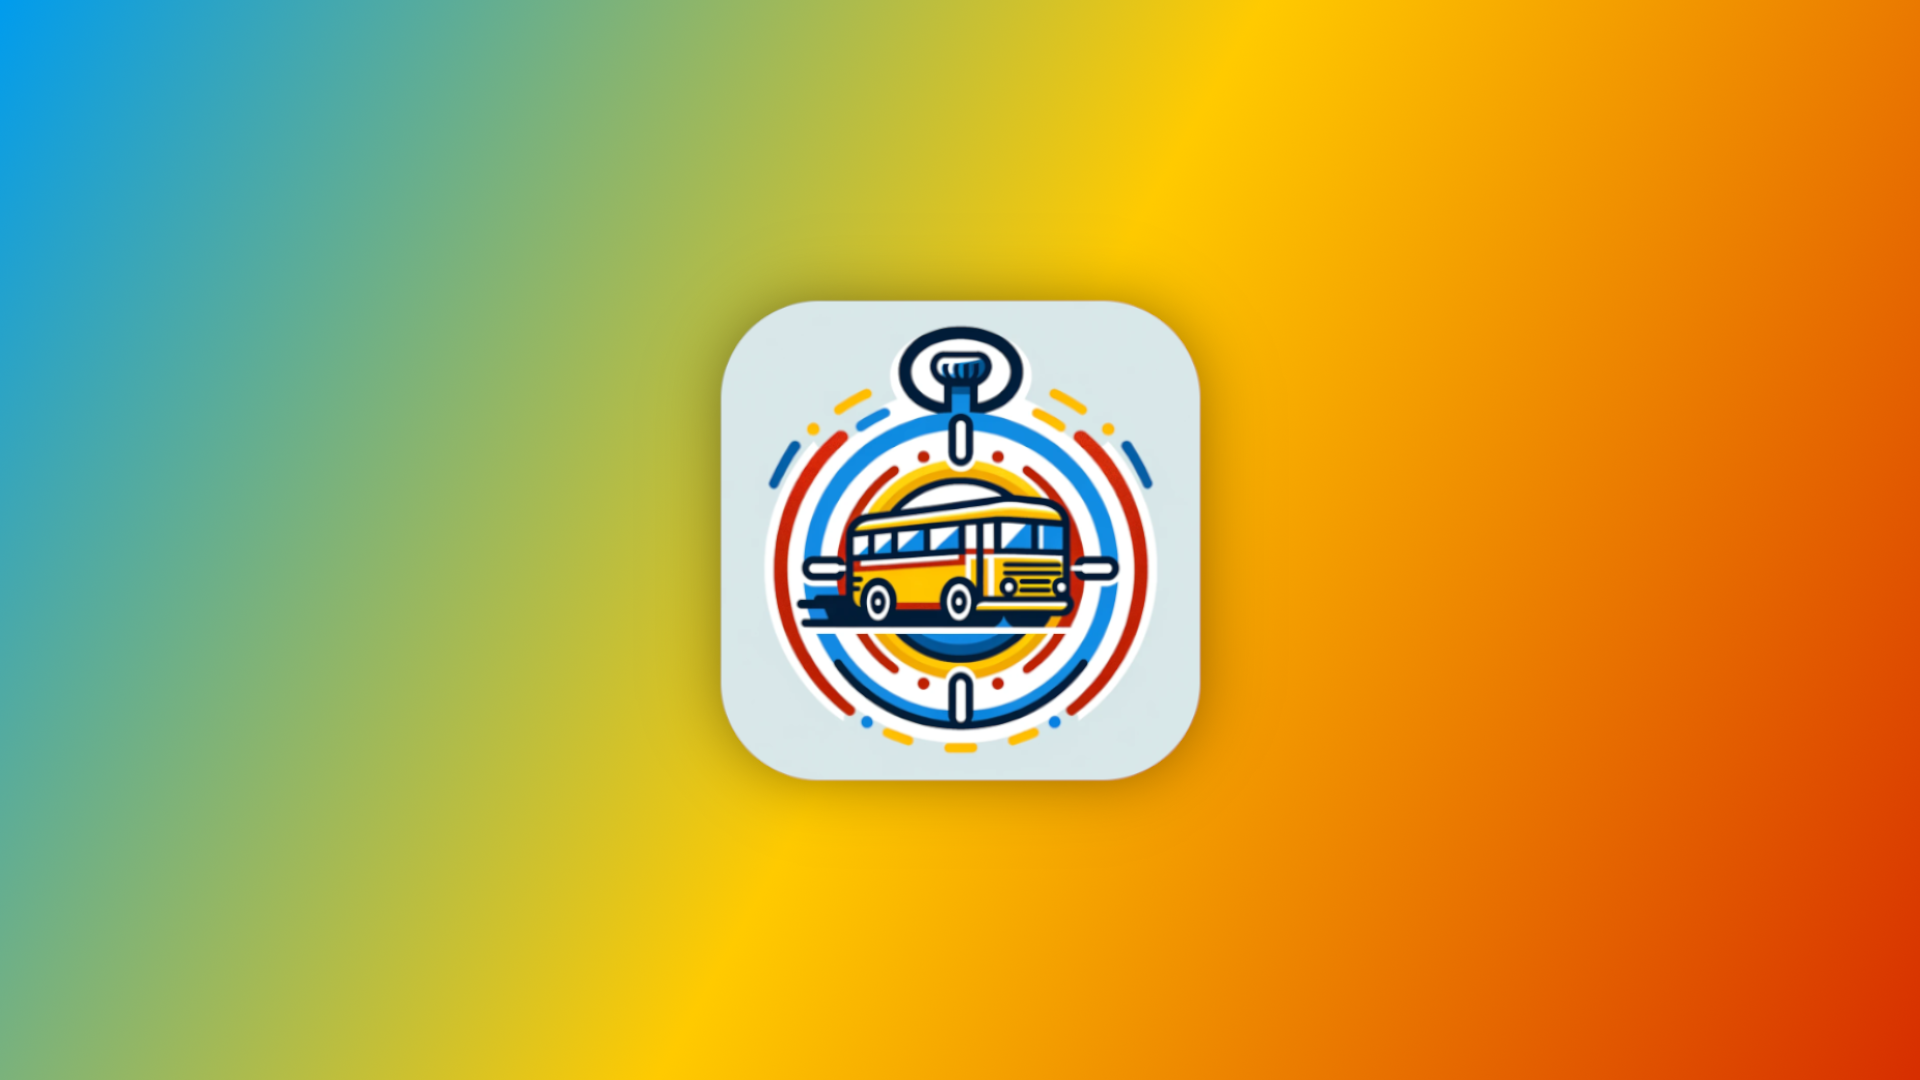 Bus app logo